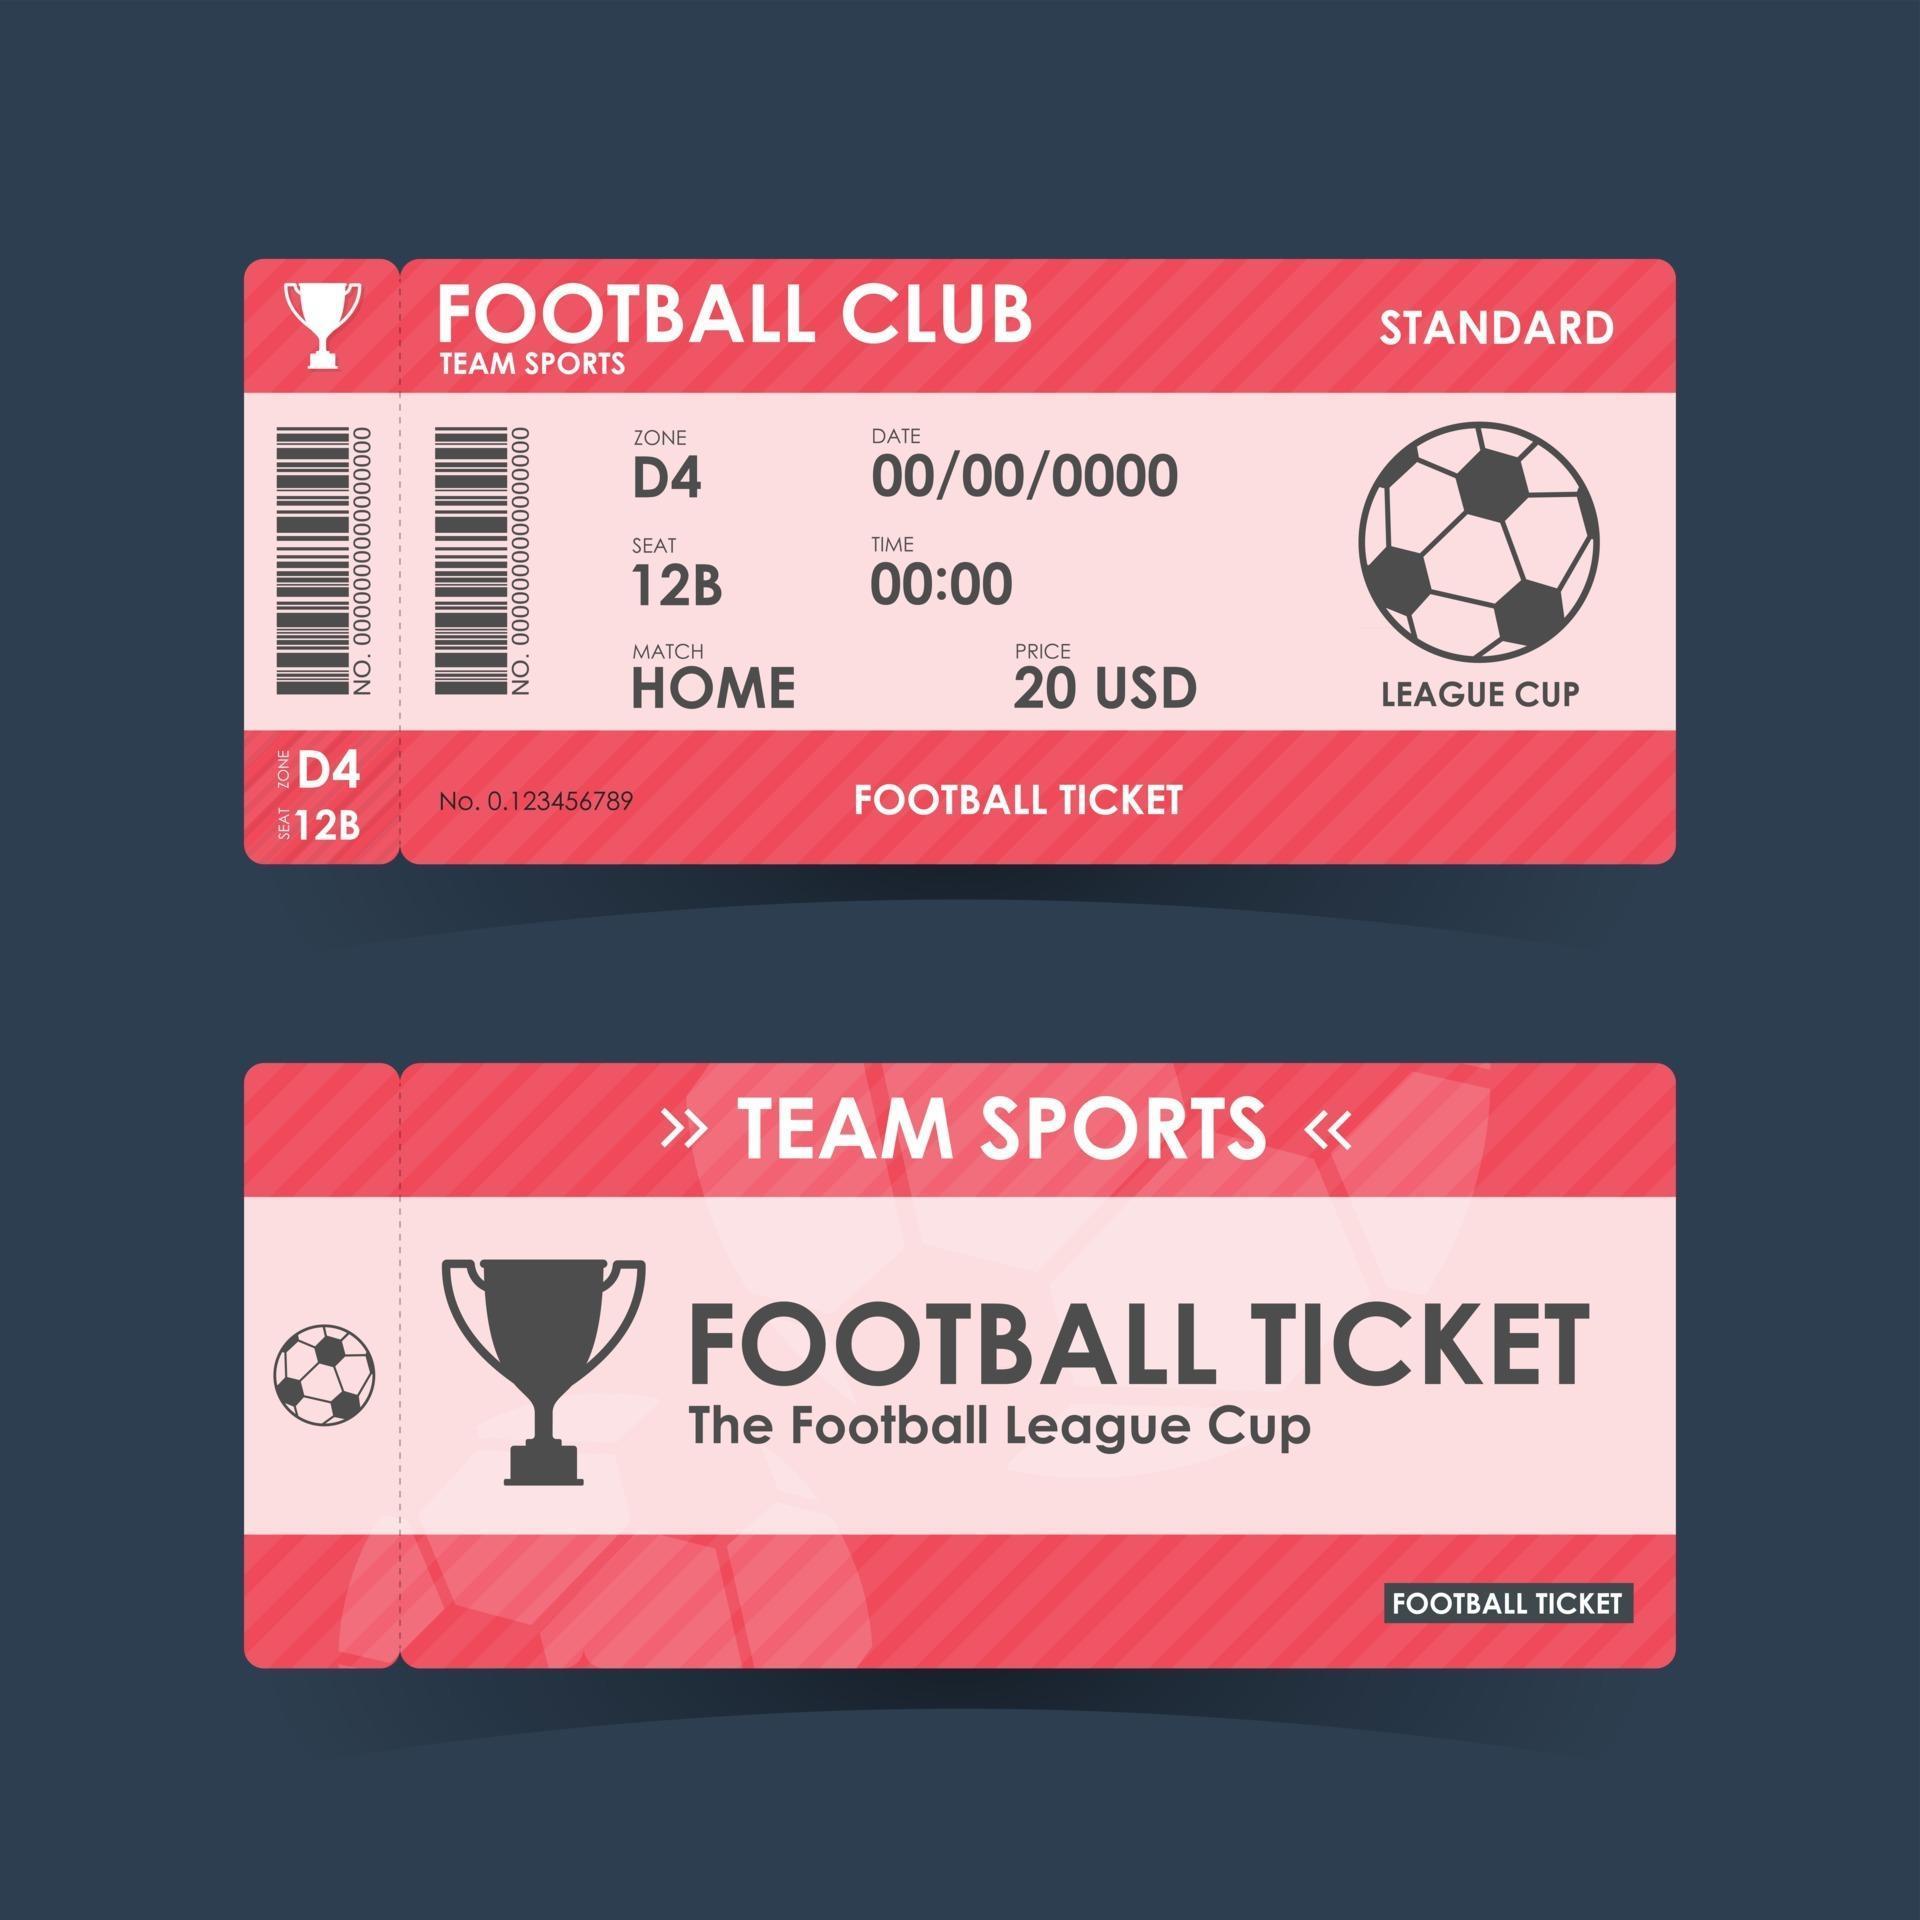 football-soccer-ticket-guidelines-for-element-design-2991538-vector-art-at-vecteezy